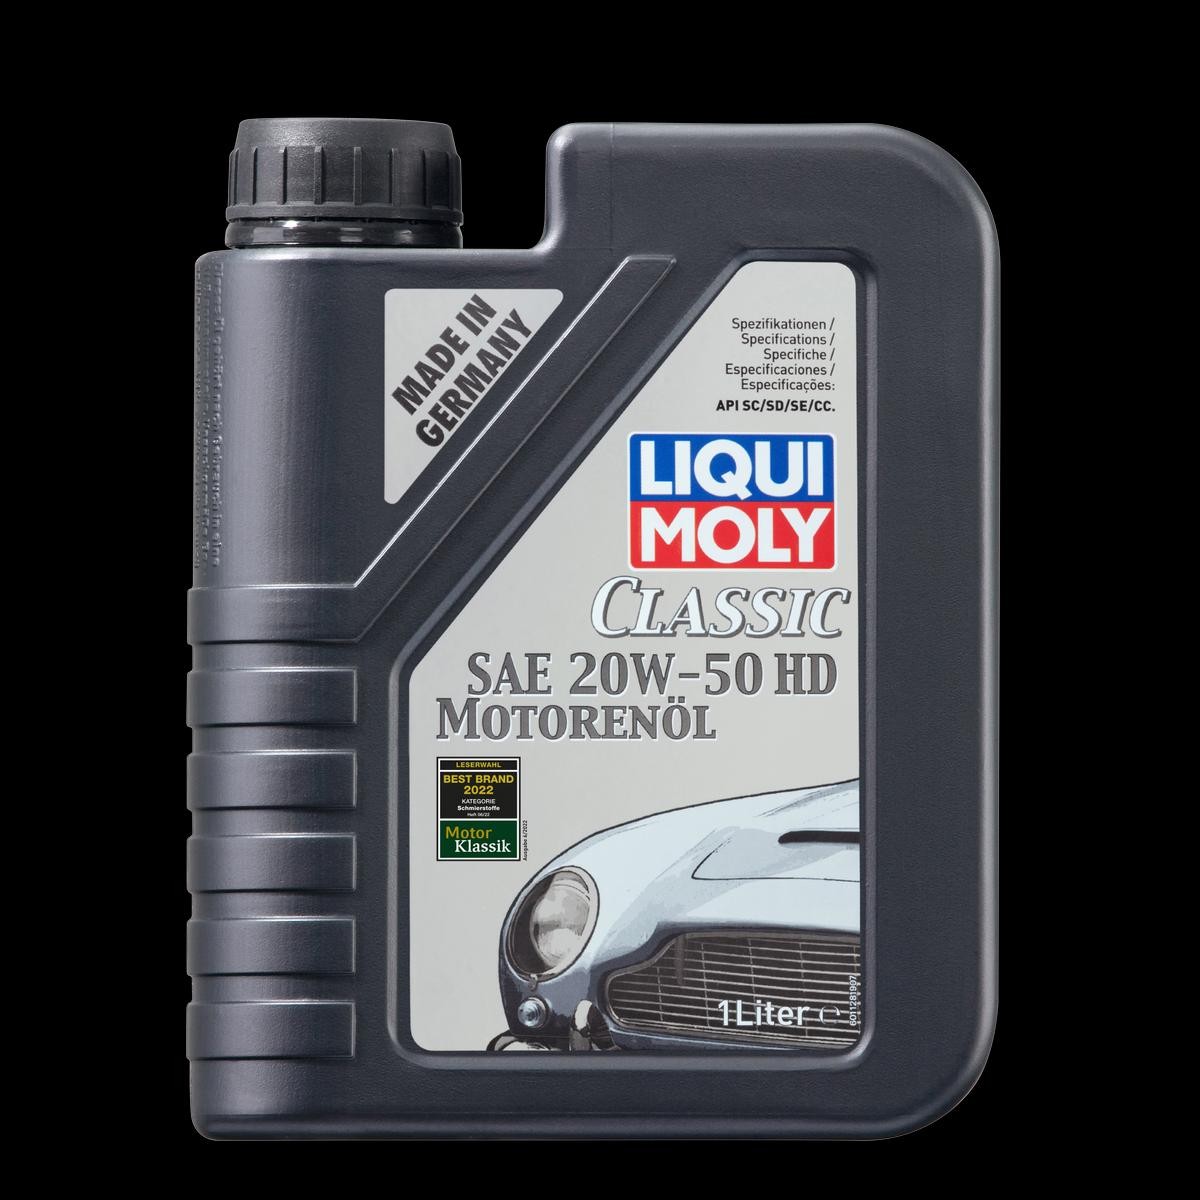 LIQUI MOLY Classic Motoroil, HD 20W-50, 1l Motor oil 1128 buy